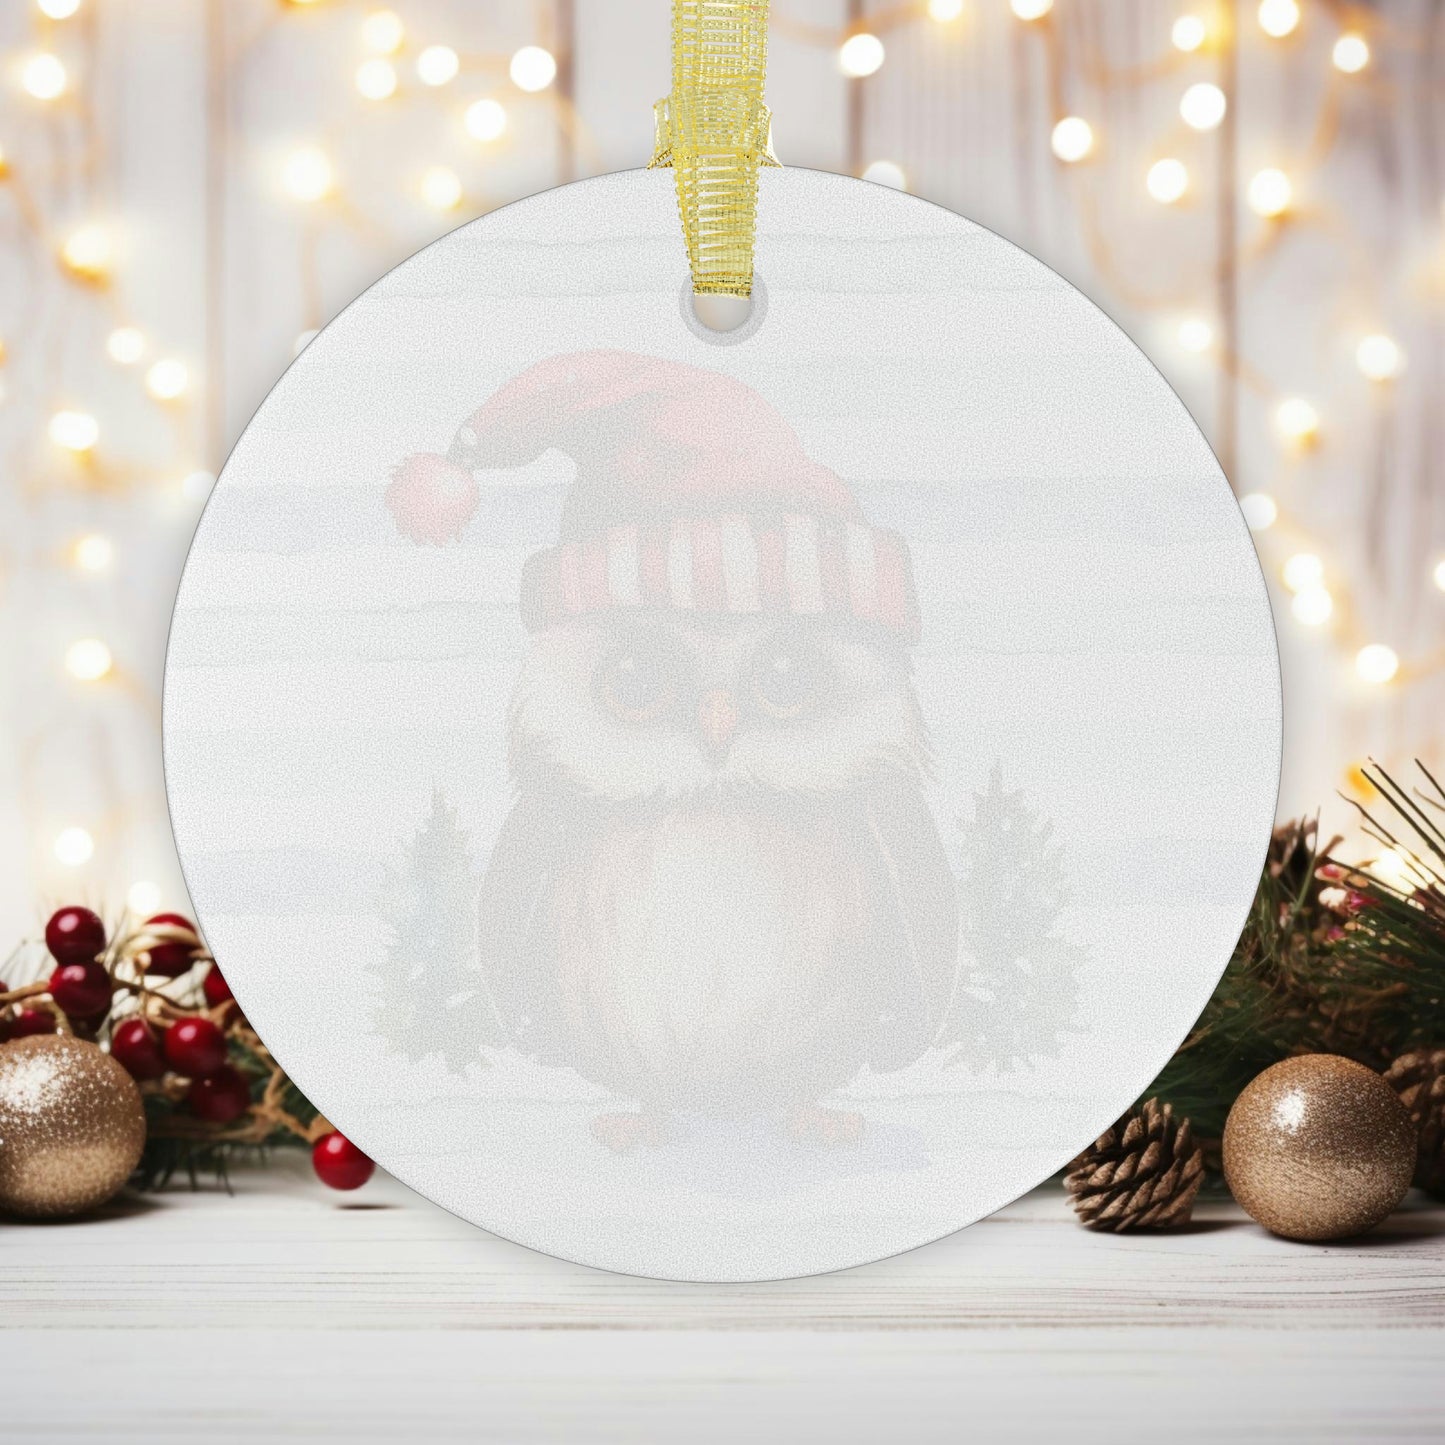 Glass Owl Ornament, Owl Gift, Owl Tree Decor, Owl Lover, Winter Owl, Christmas Ornament - Premium Home Decor - Just $18.50! Shop now at Nine Thirty Nine Design